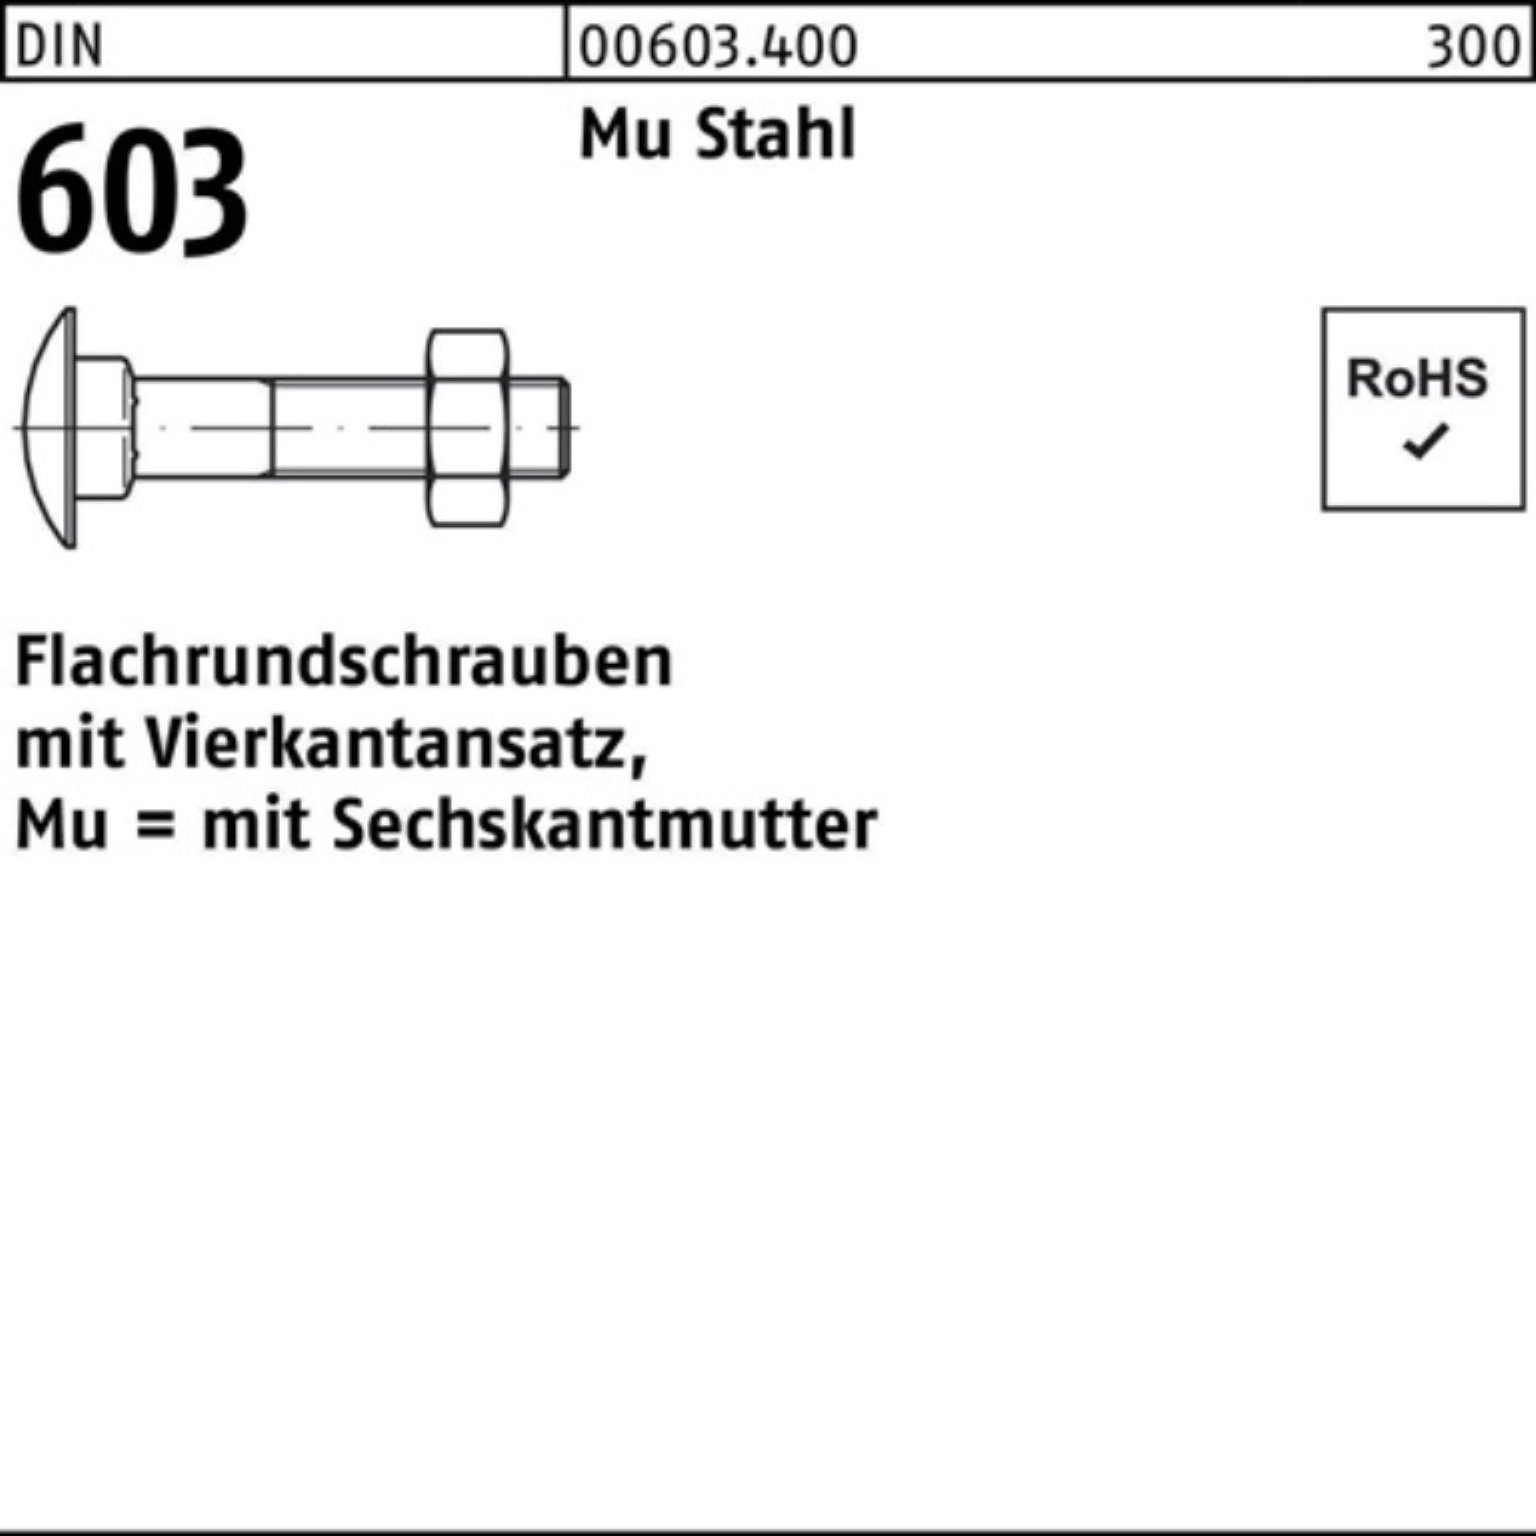 Reyher Schraube 500er Pack Flachrundschraube DIN 603 Vierkantansatz/6-ktmutter M6x16 M